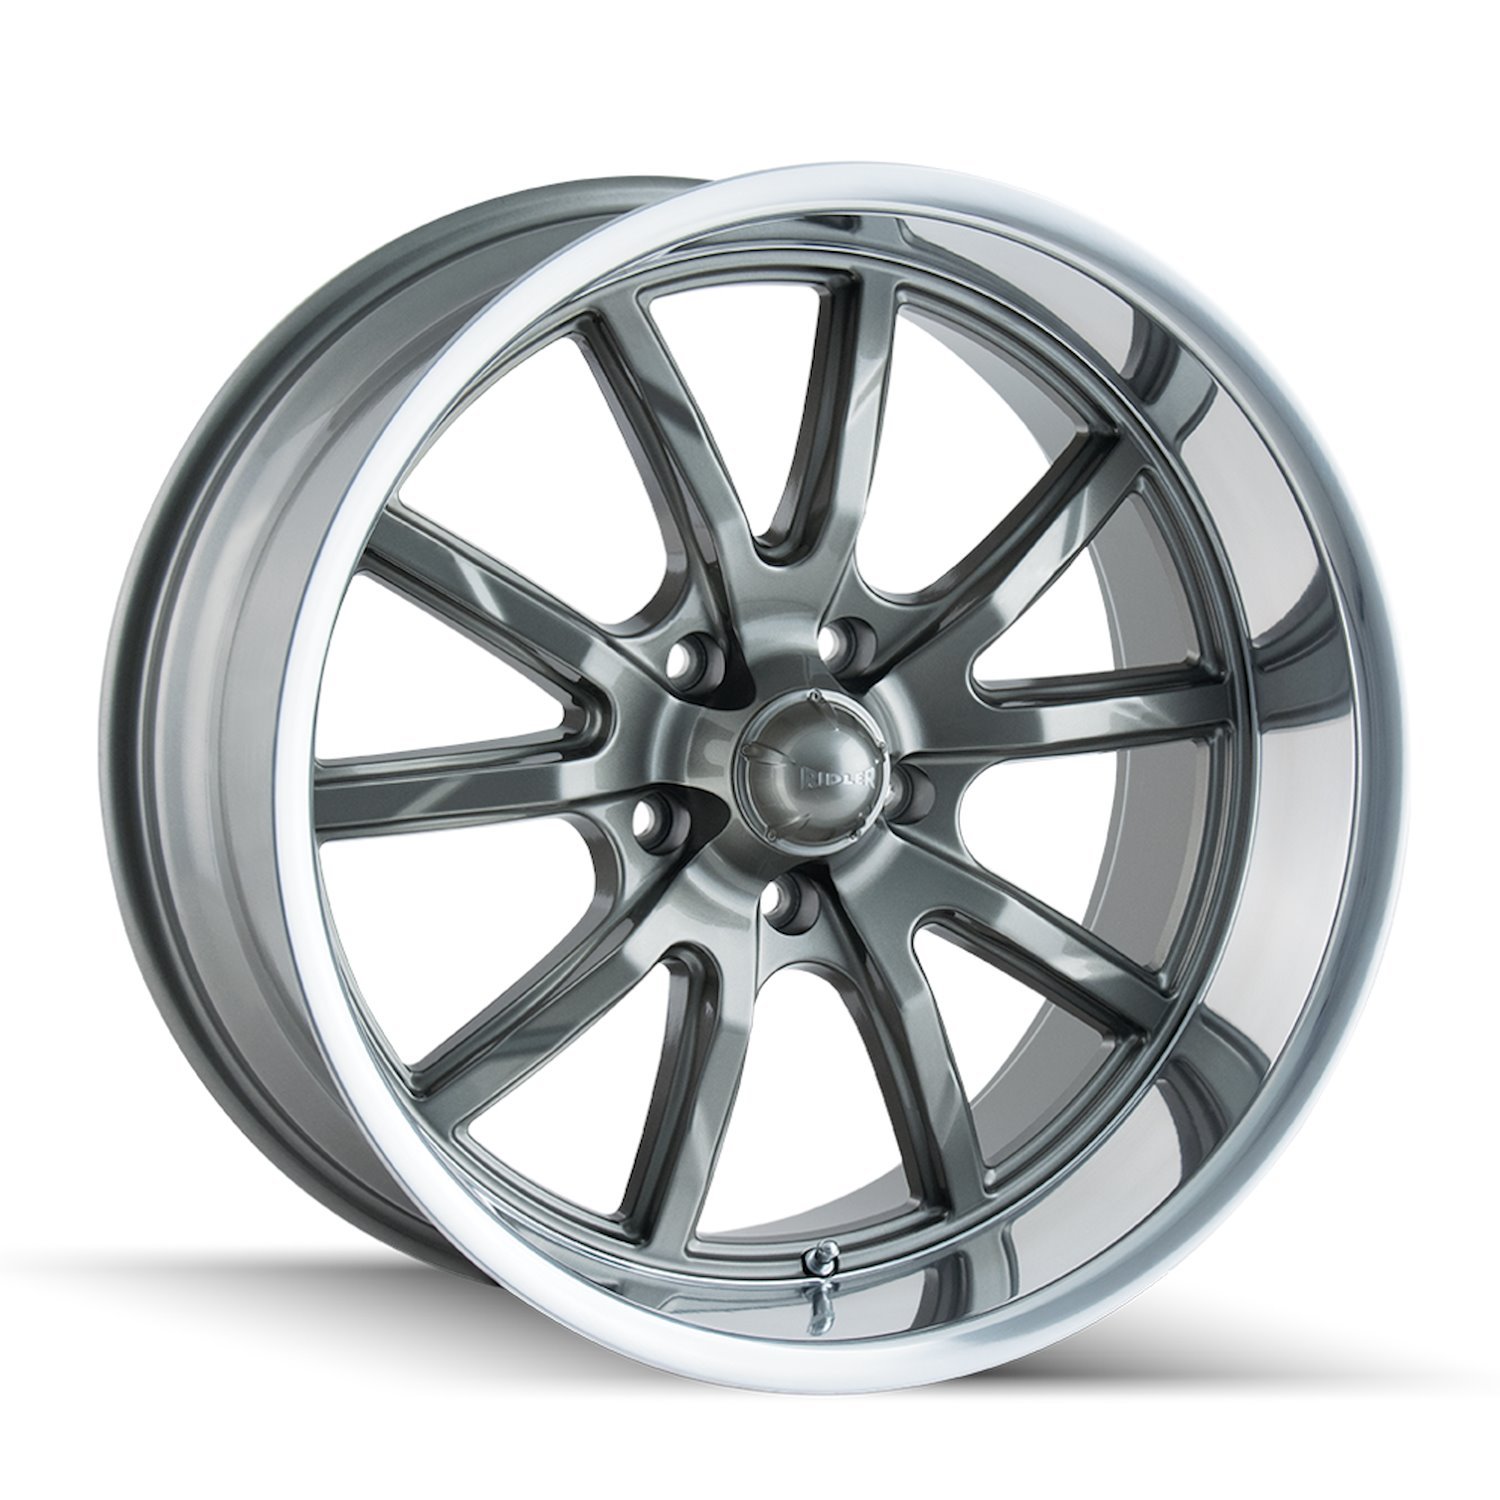 650-7865G 650-Series Wheel [Size: 17" x 8"] Gloss Grey Polished Finish